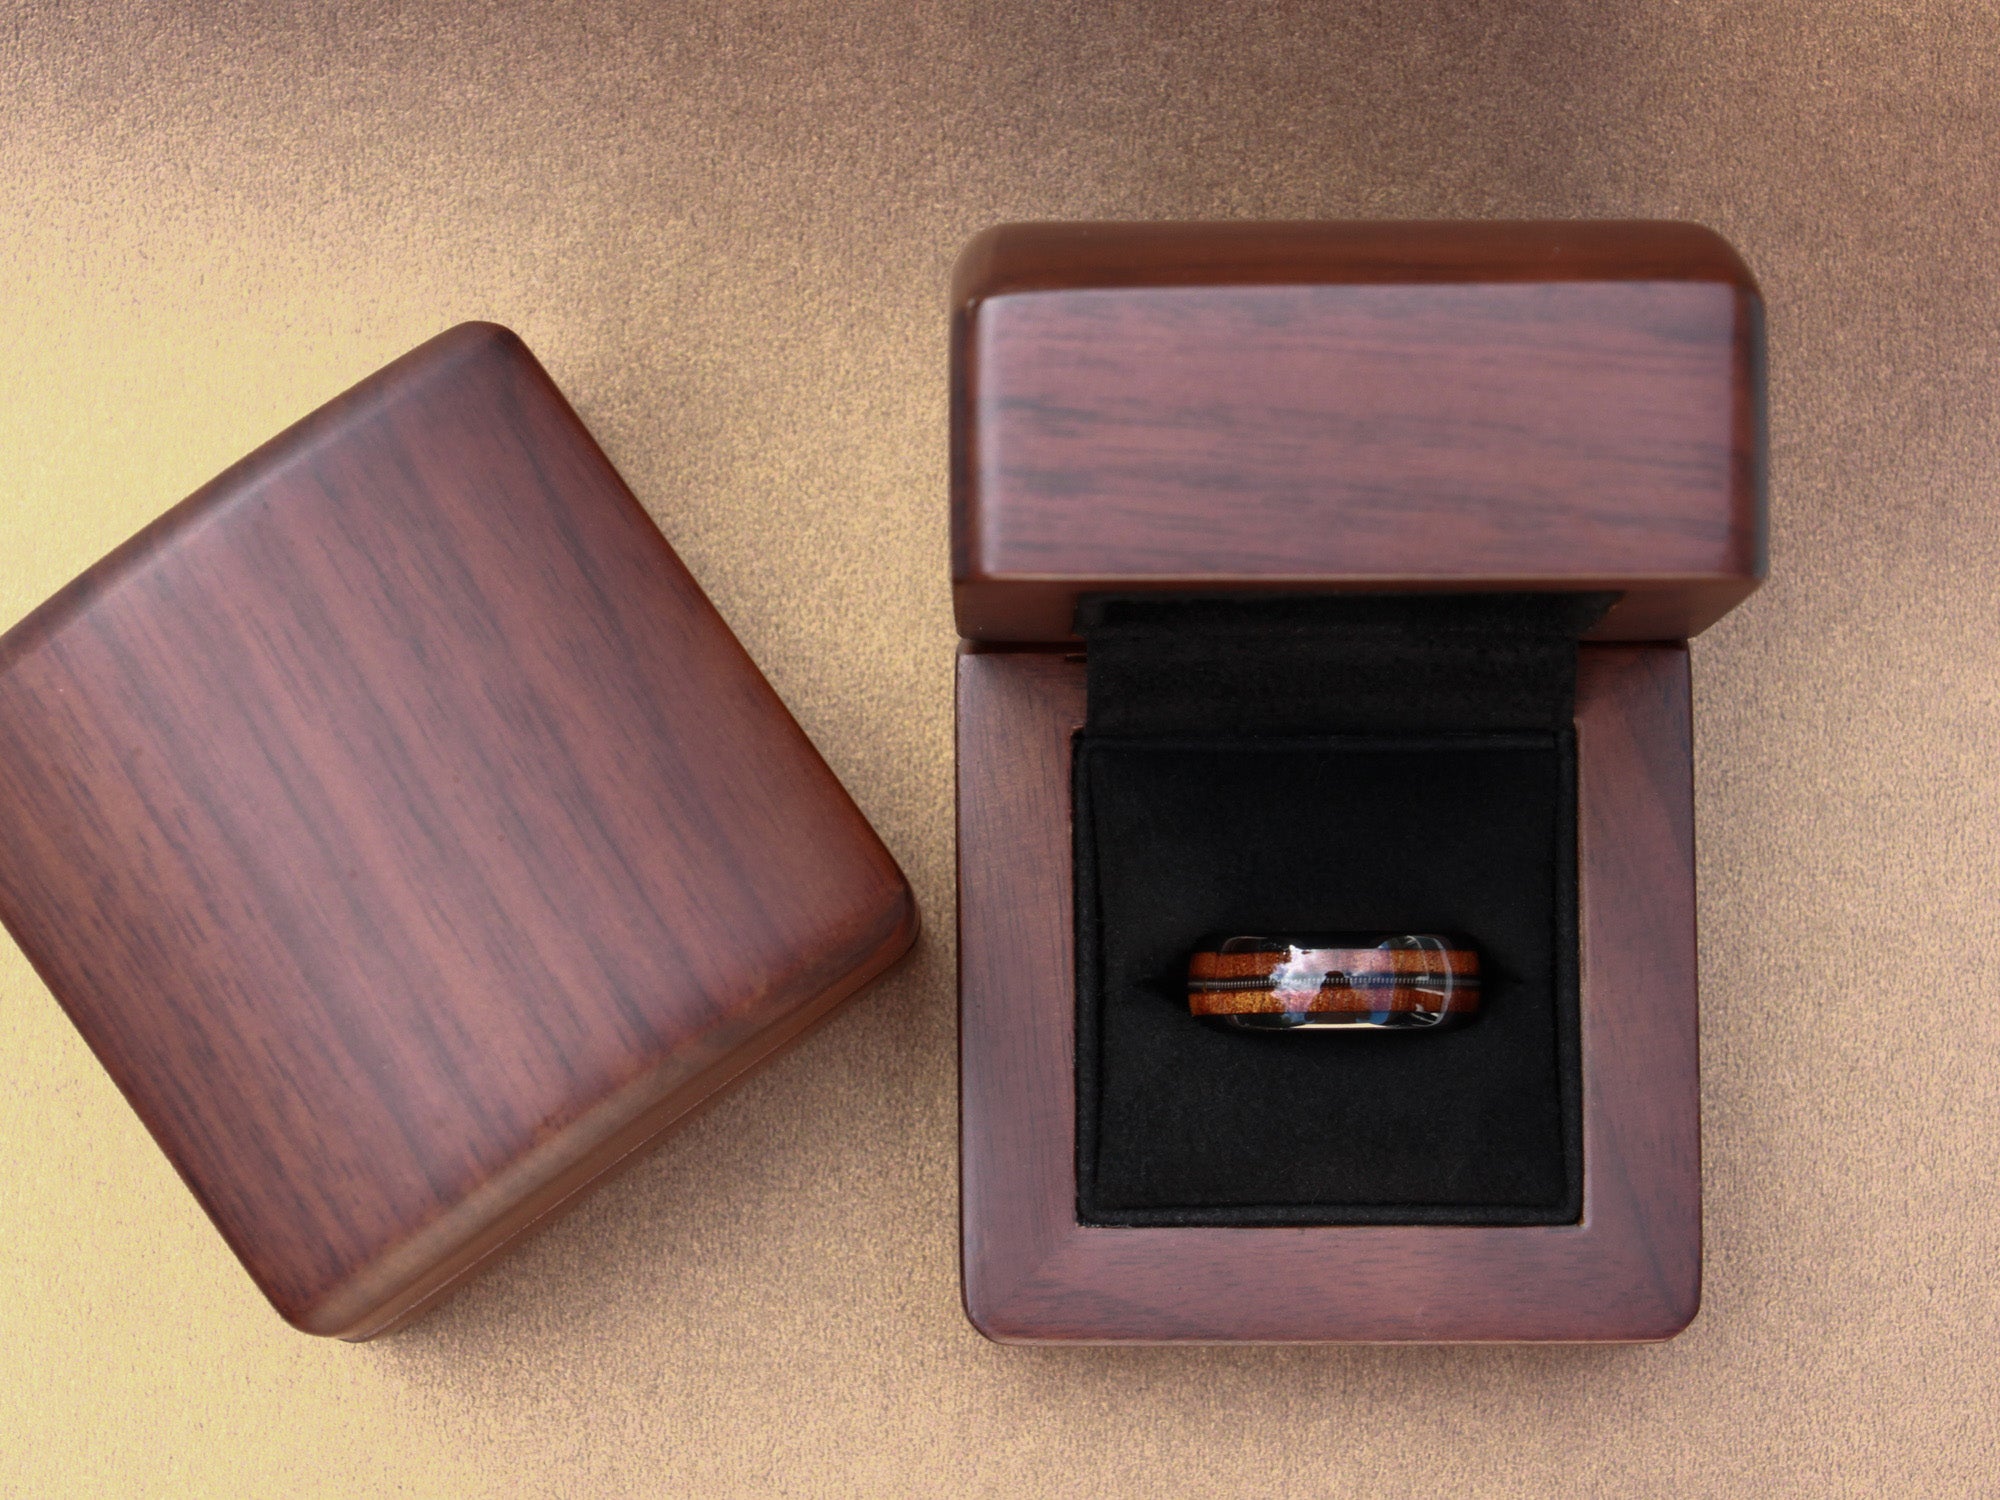 koa guitar string tungsten ring, black polished ring with guitar string and koa wood inlays, unique mens wedding ring, walnut wood box